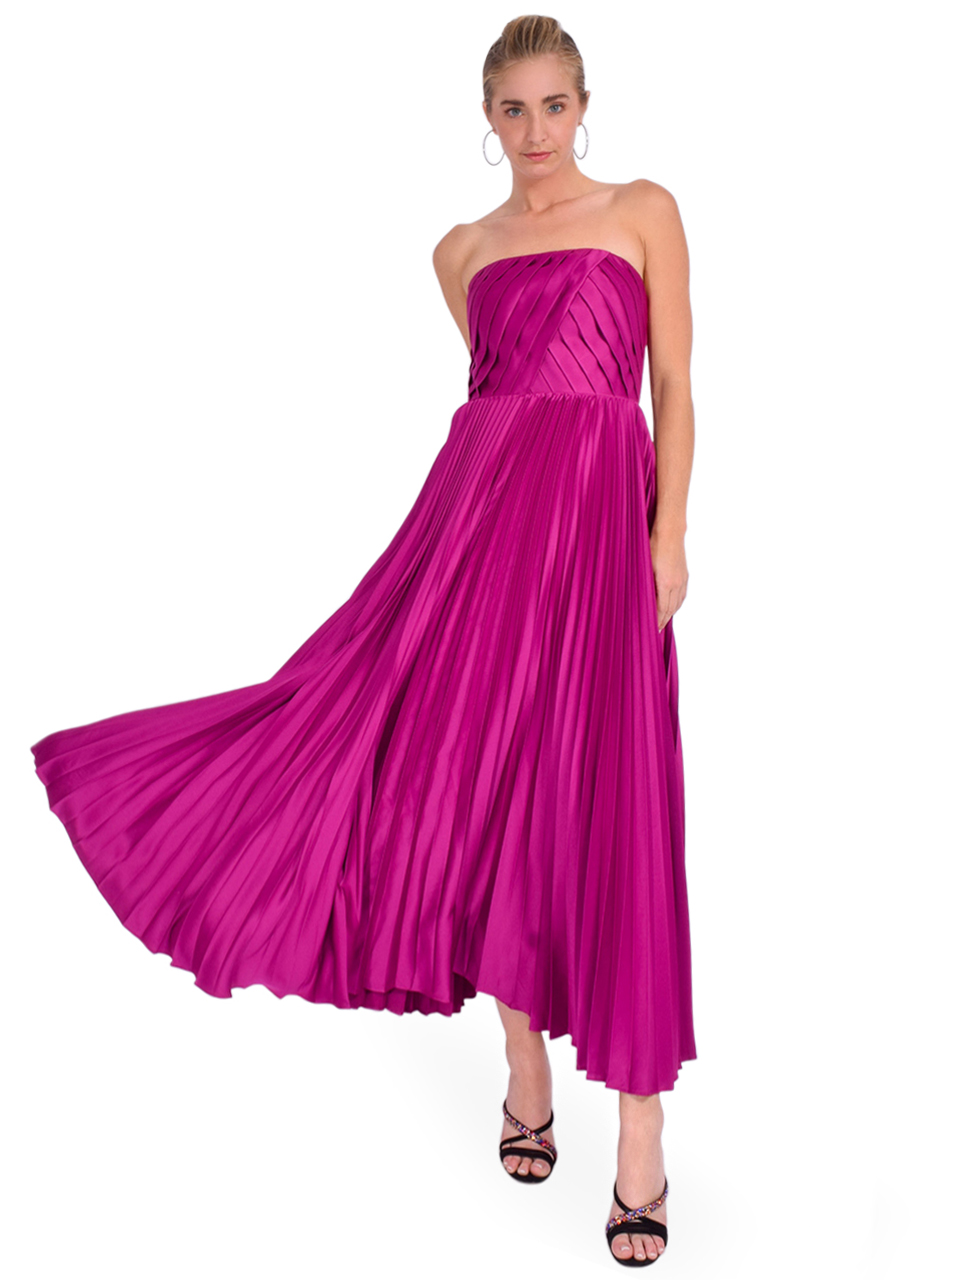 AMUR Conan Strapless Dress in Purple Sangria Front View 2